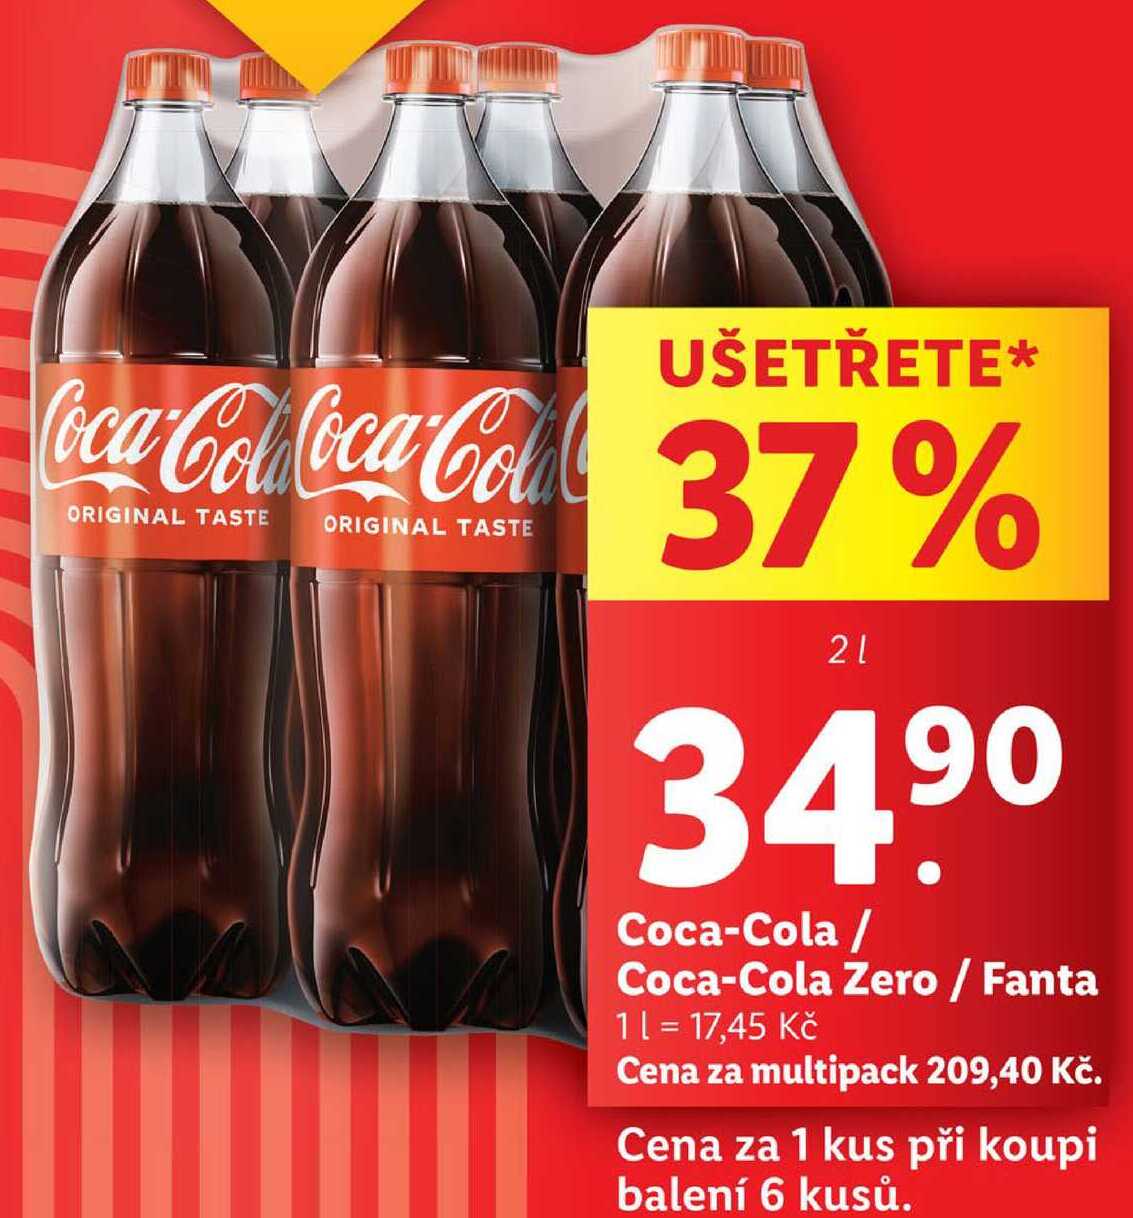 Coca-Cola / Coca-Cola Zero / Fanta, 2 l